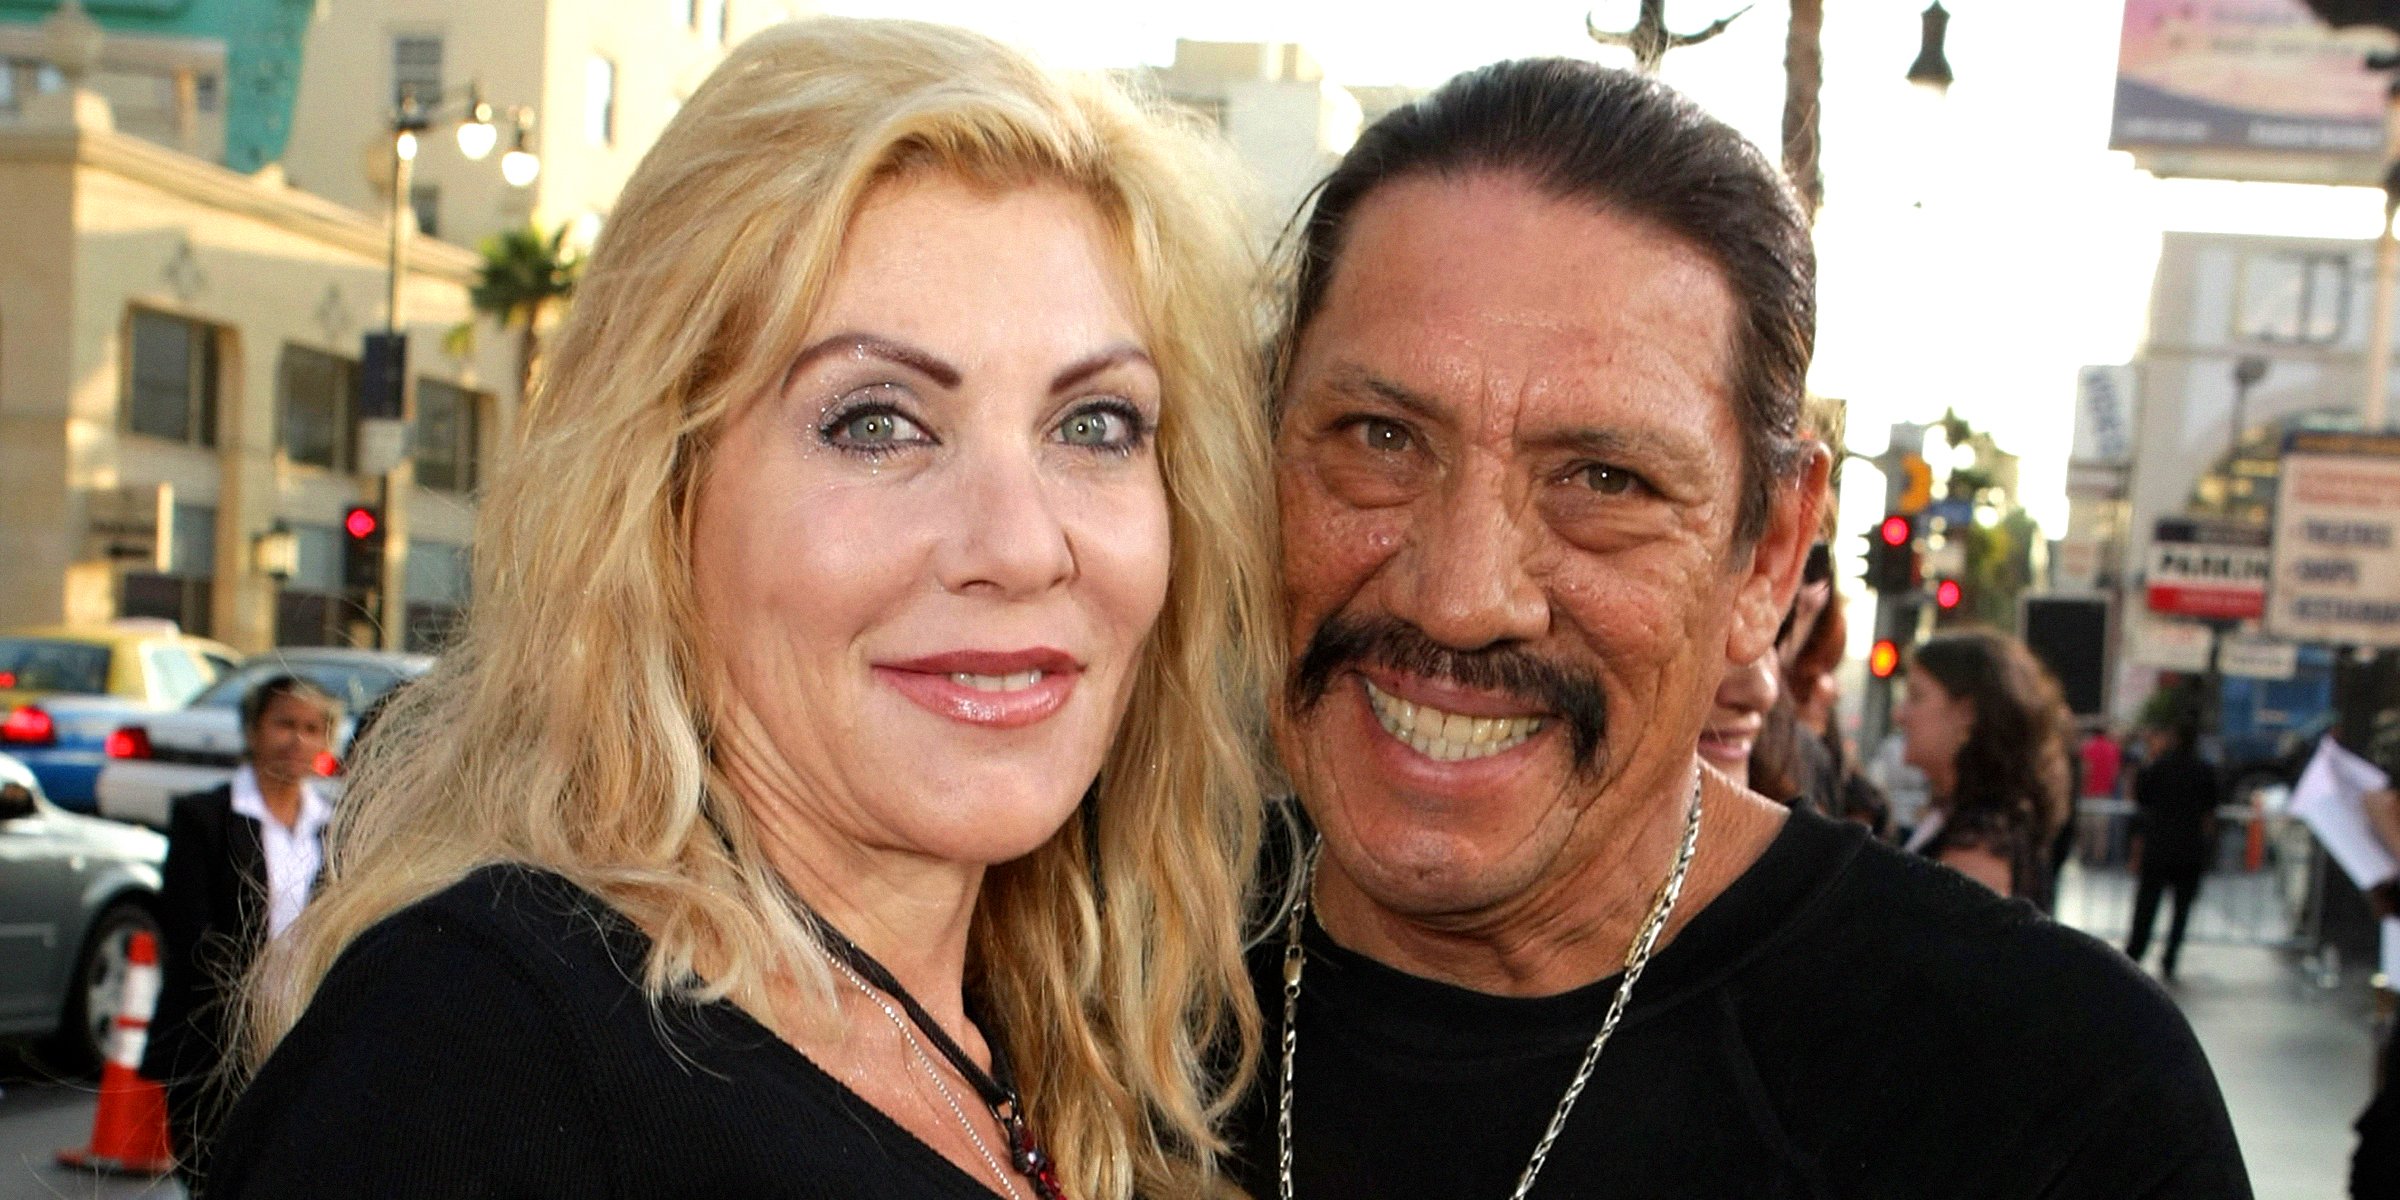 Debbie Shreve Trejo and her ex-husband Danny Trejo. | Source: Getty Images